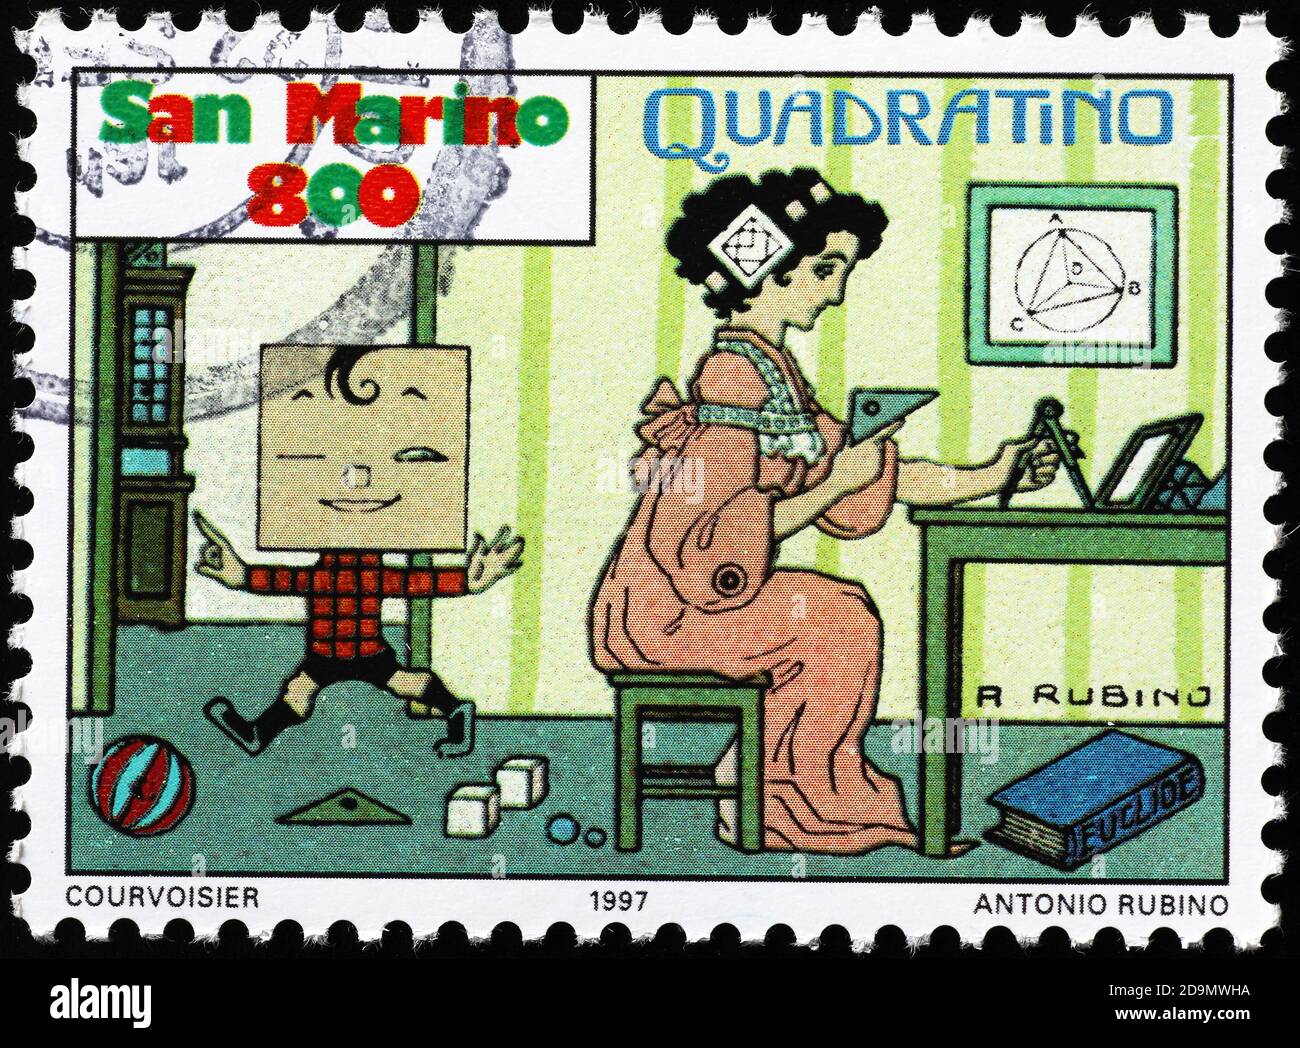 Old italian cartoon Quadratino on postage stamp Stock Photo